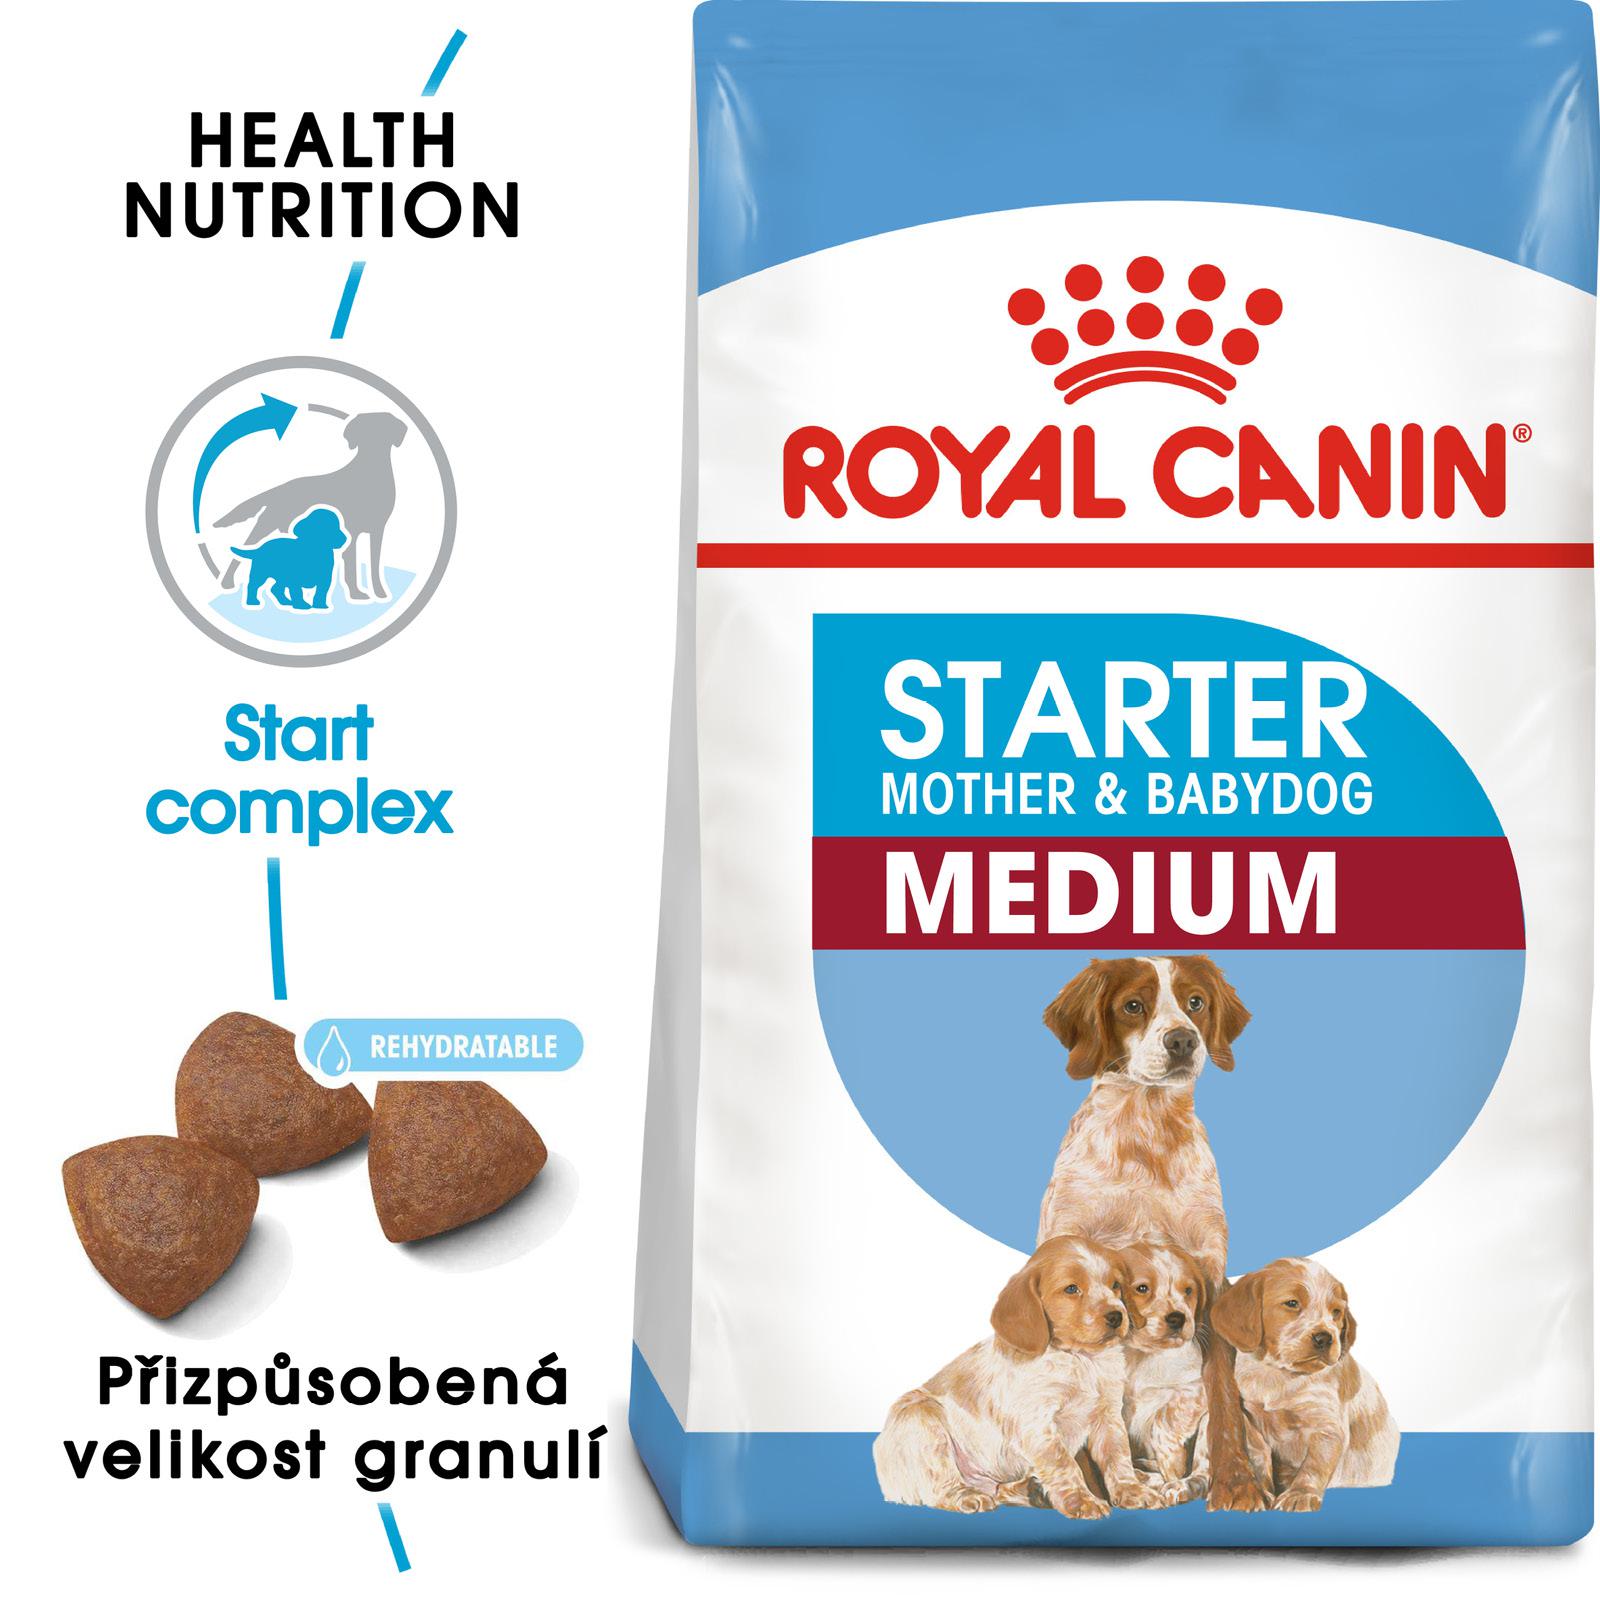 Royal Canin MEDIUM STARTER - 4kg